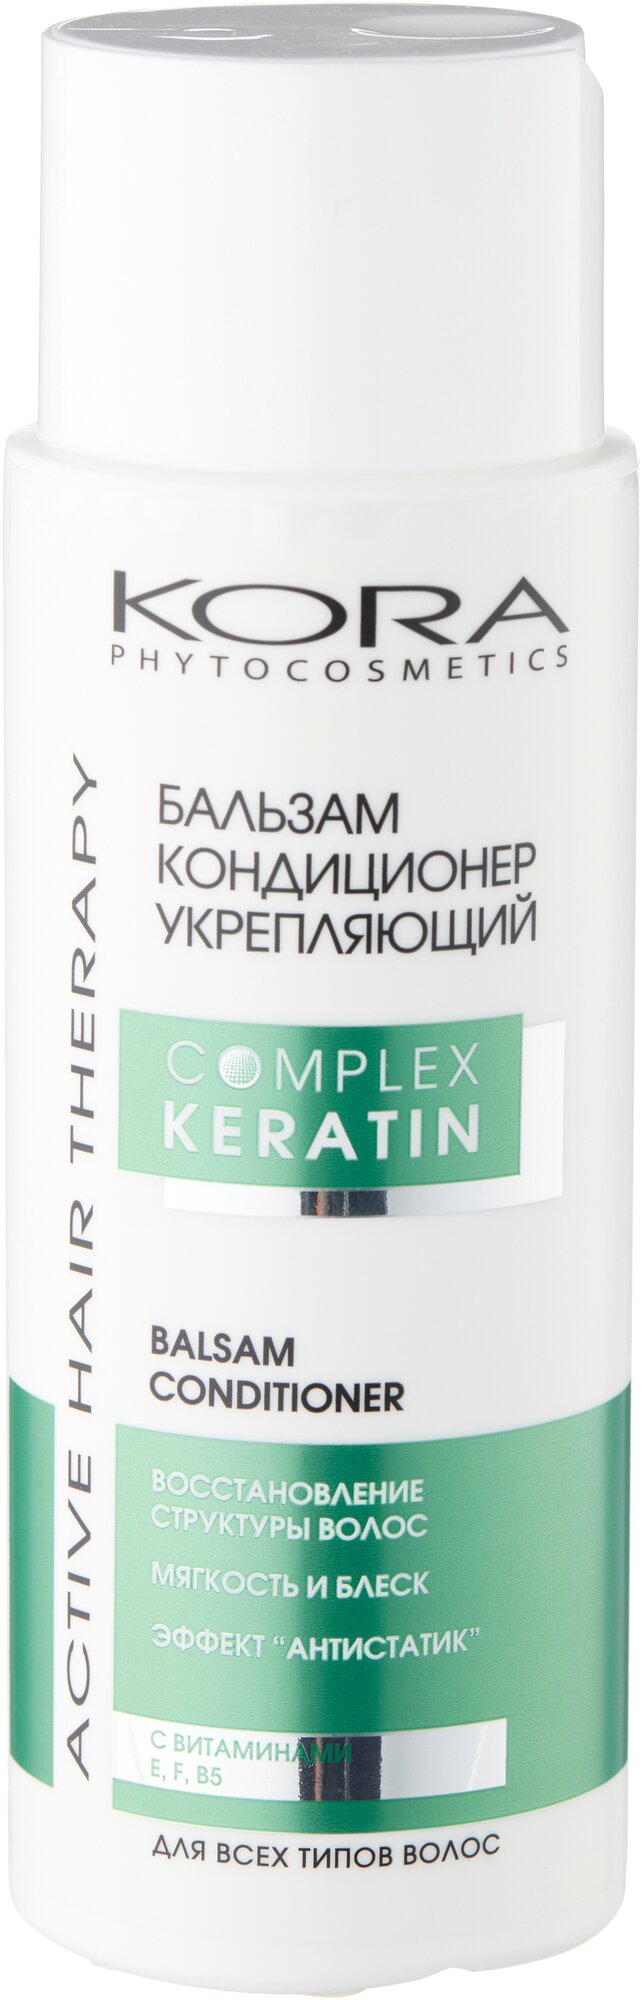 Kora Phitocosmetics бальзам-кондиционер Active Hair Therapy Укрепляющий COMPLEX KERATIN